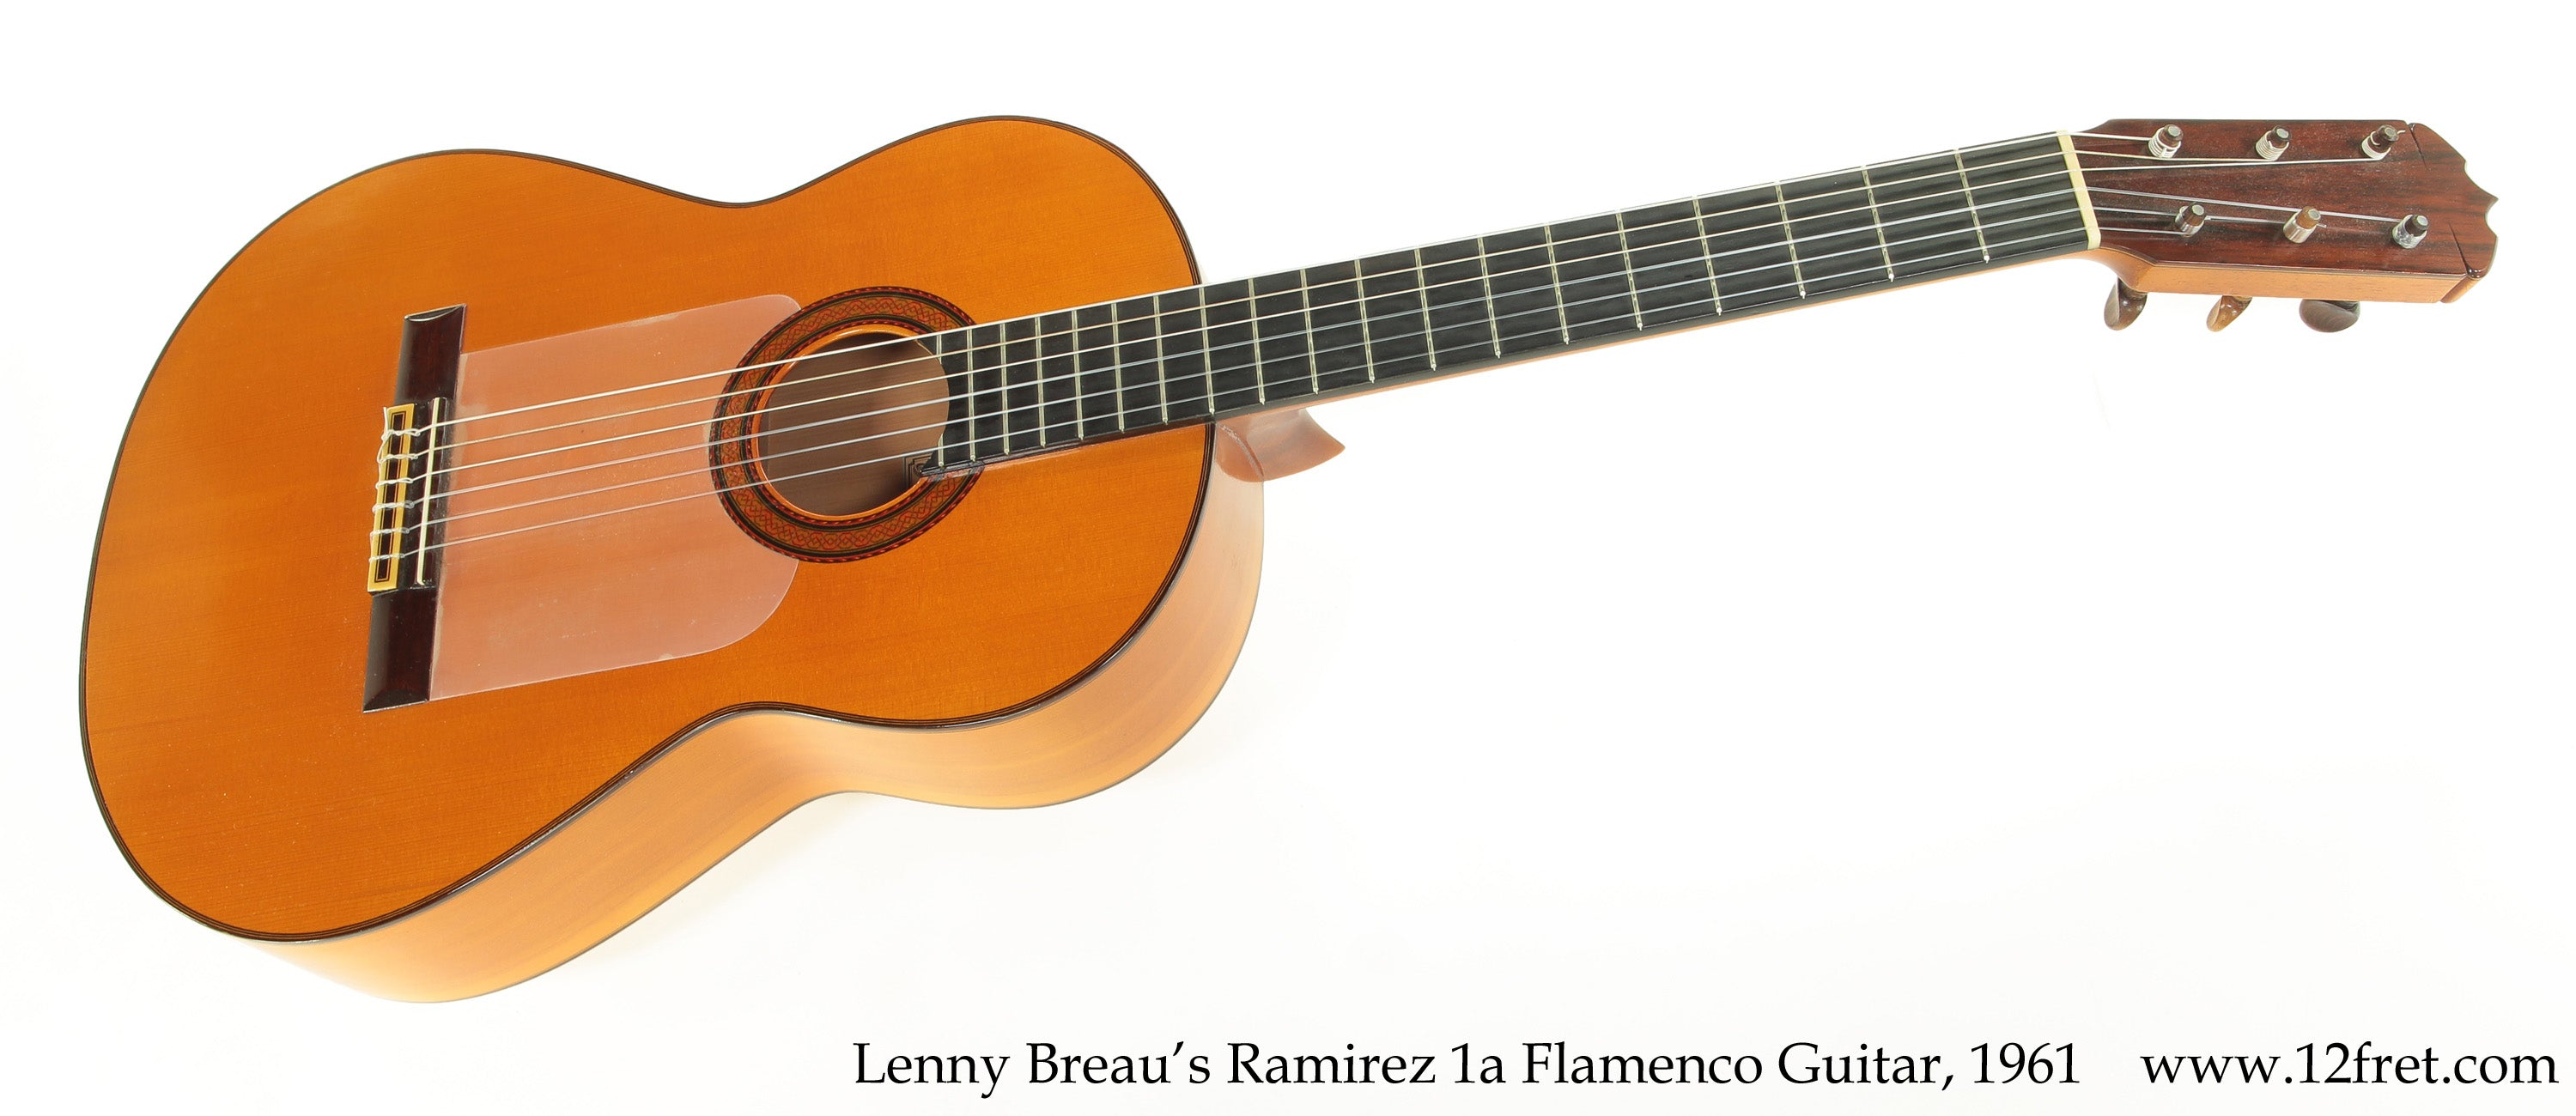 Lenny Breau's Ramirez 1a Flamenco Guitar, 1961 - The Twelfth Fret